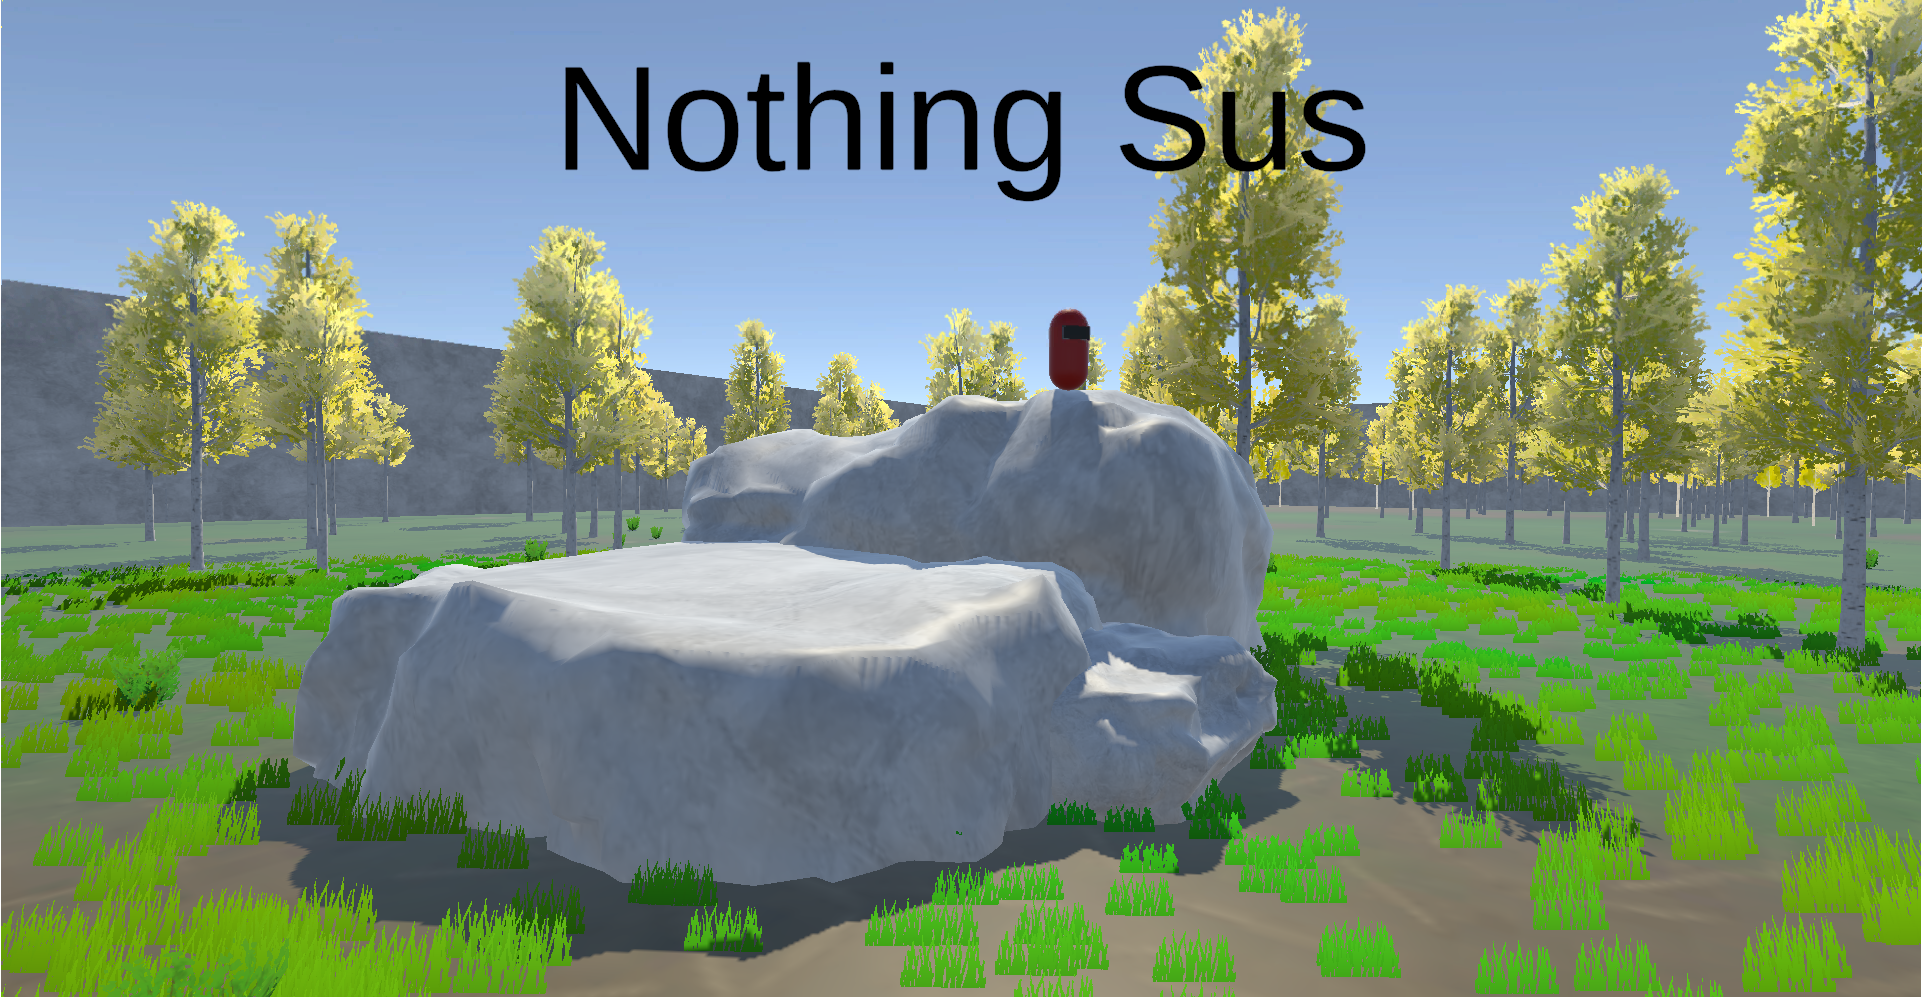 Nothing Sus